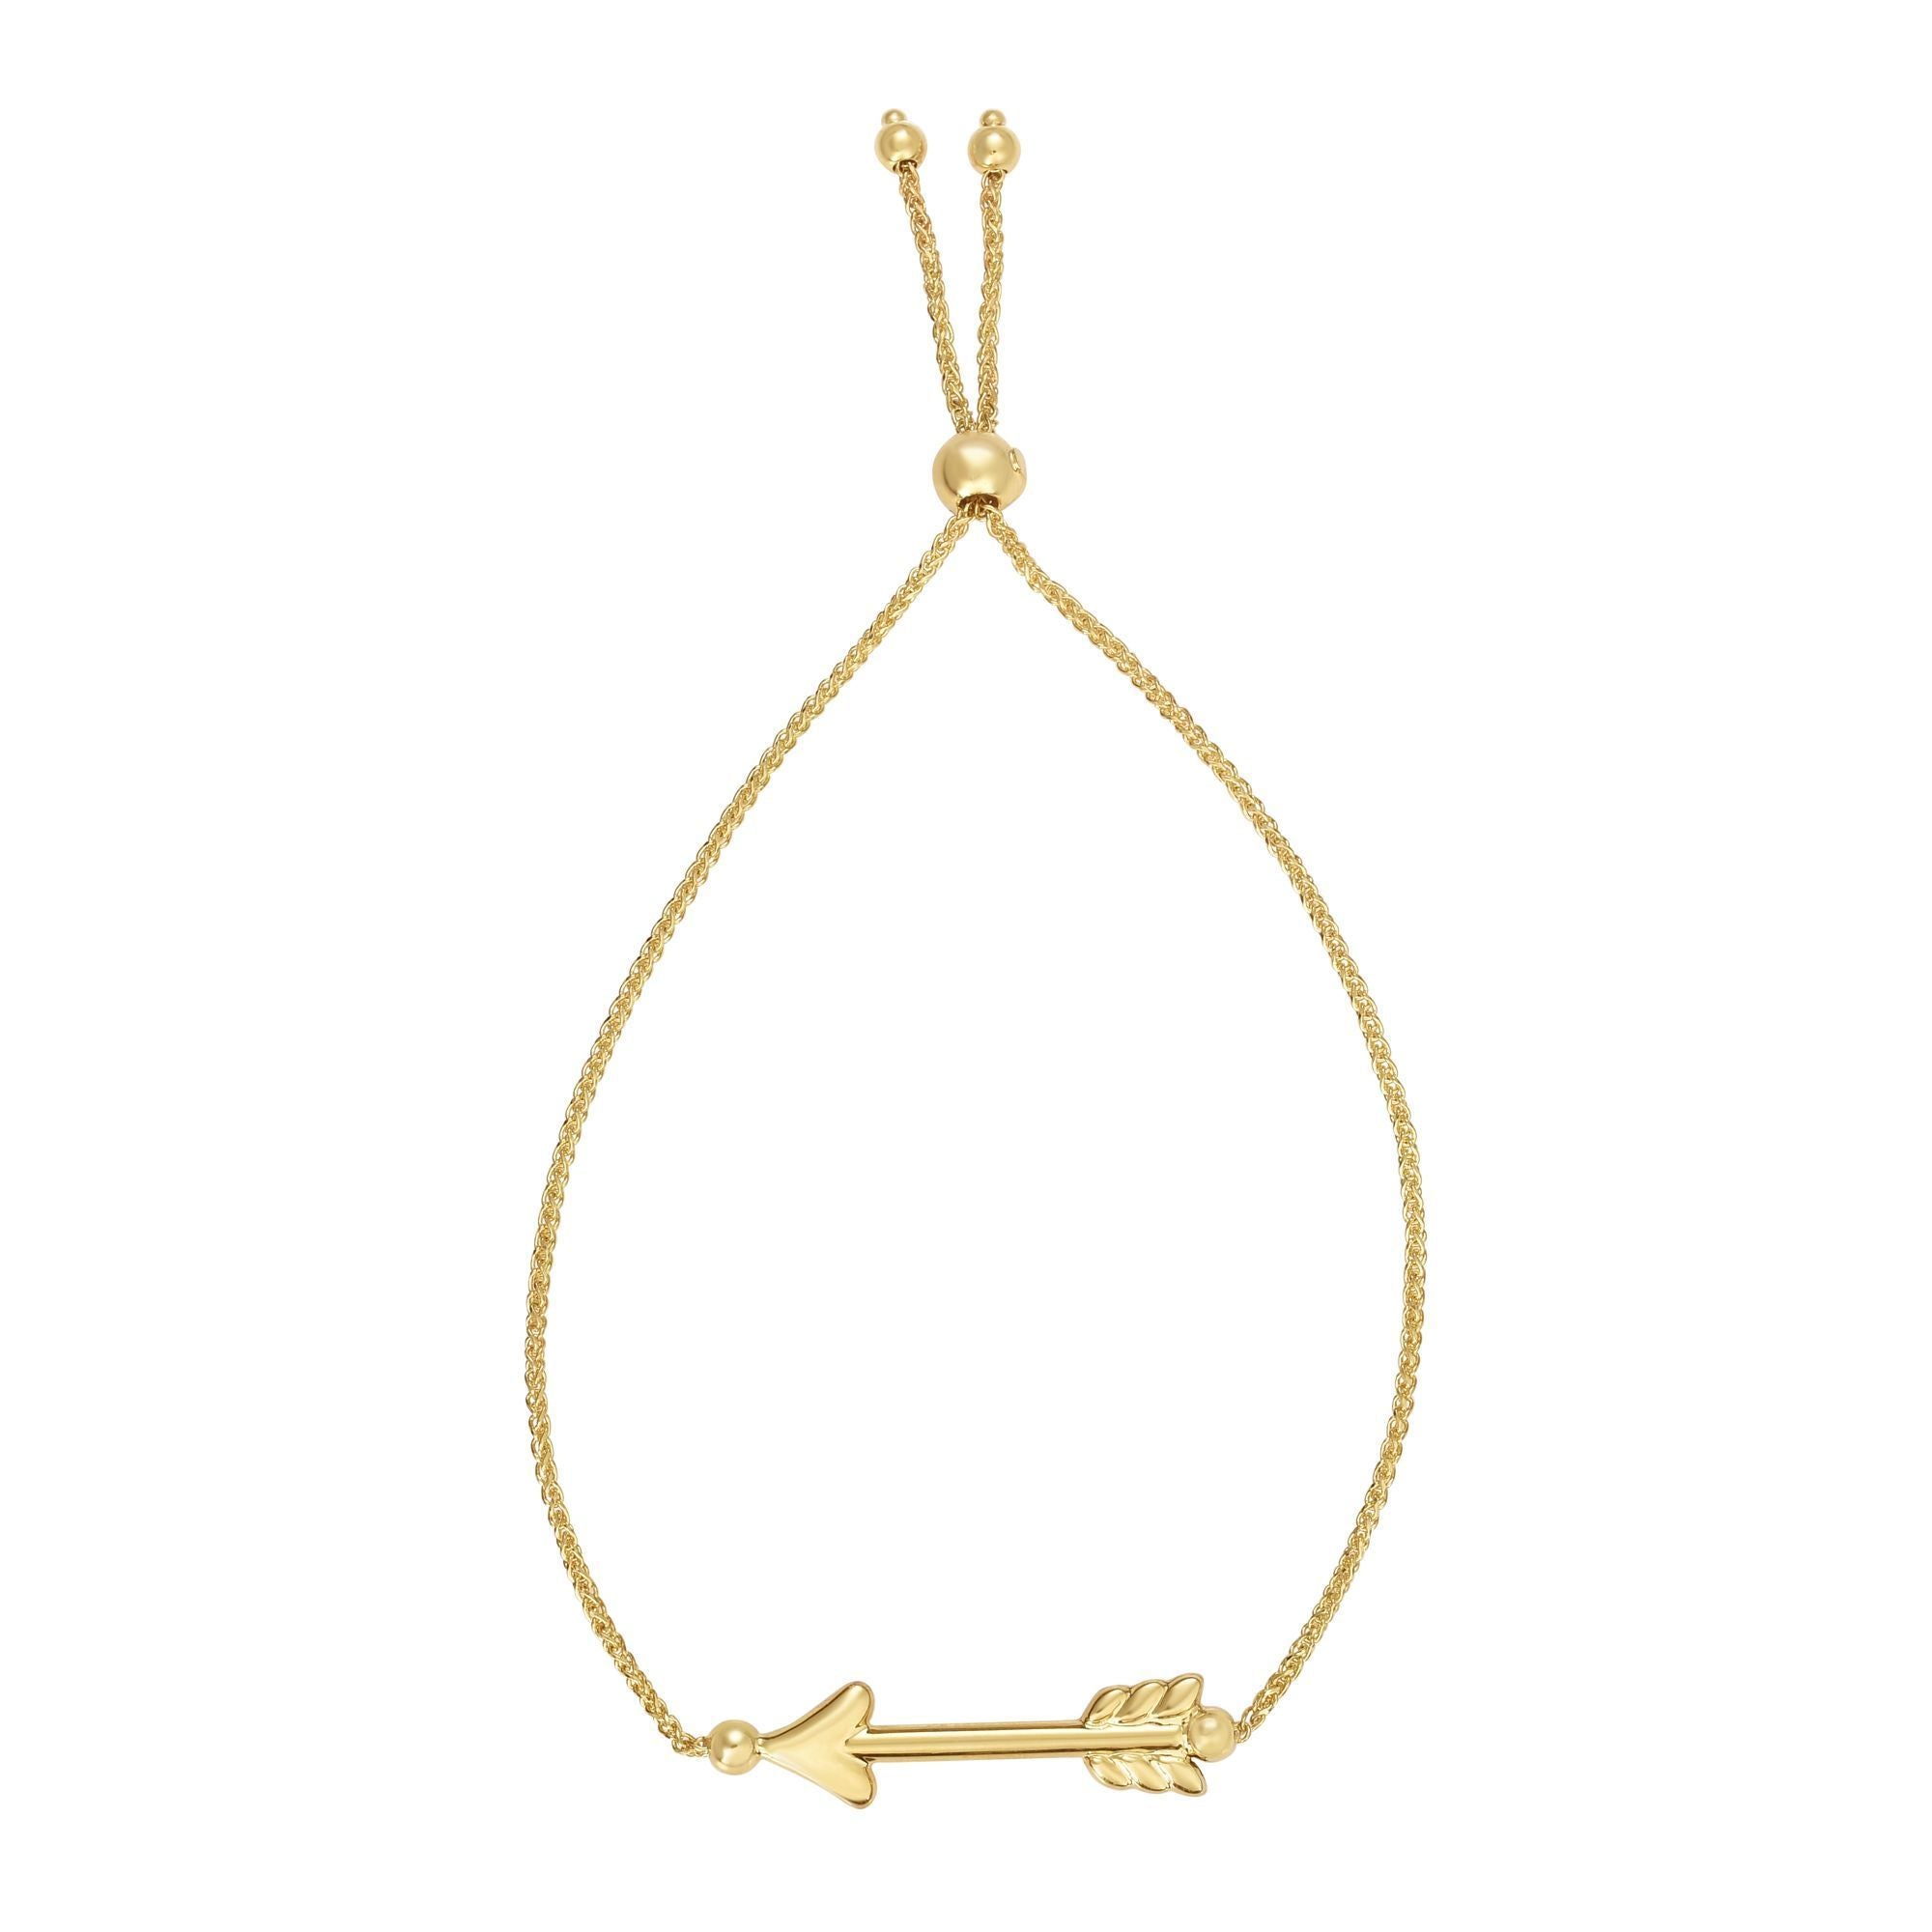 14k Yellow Gold Adjustable Arrow Charm Bolo Bracelet, 9.25" fine designer jewelry for men and women